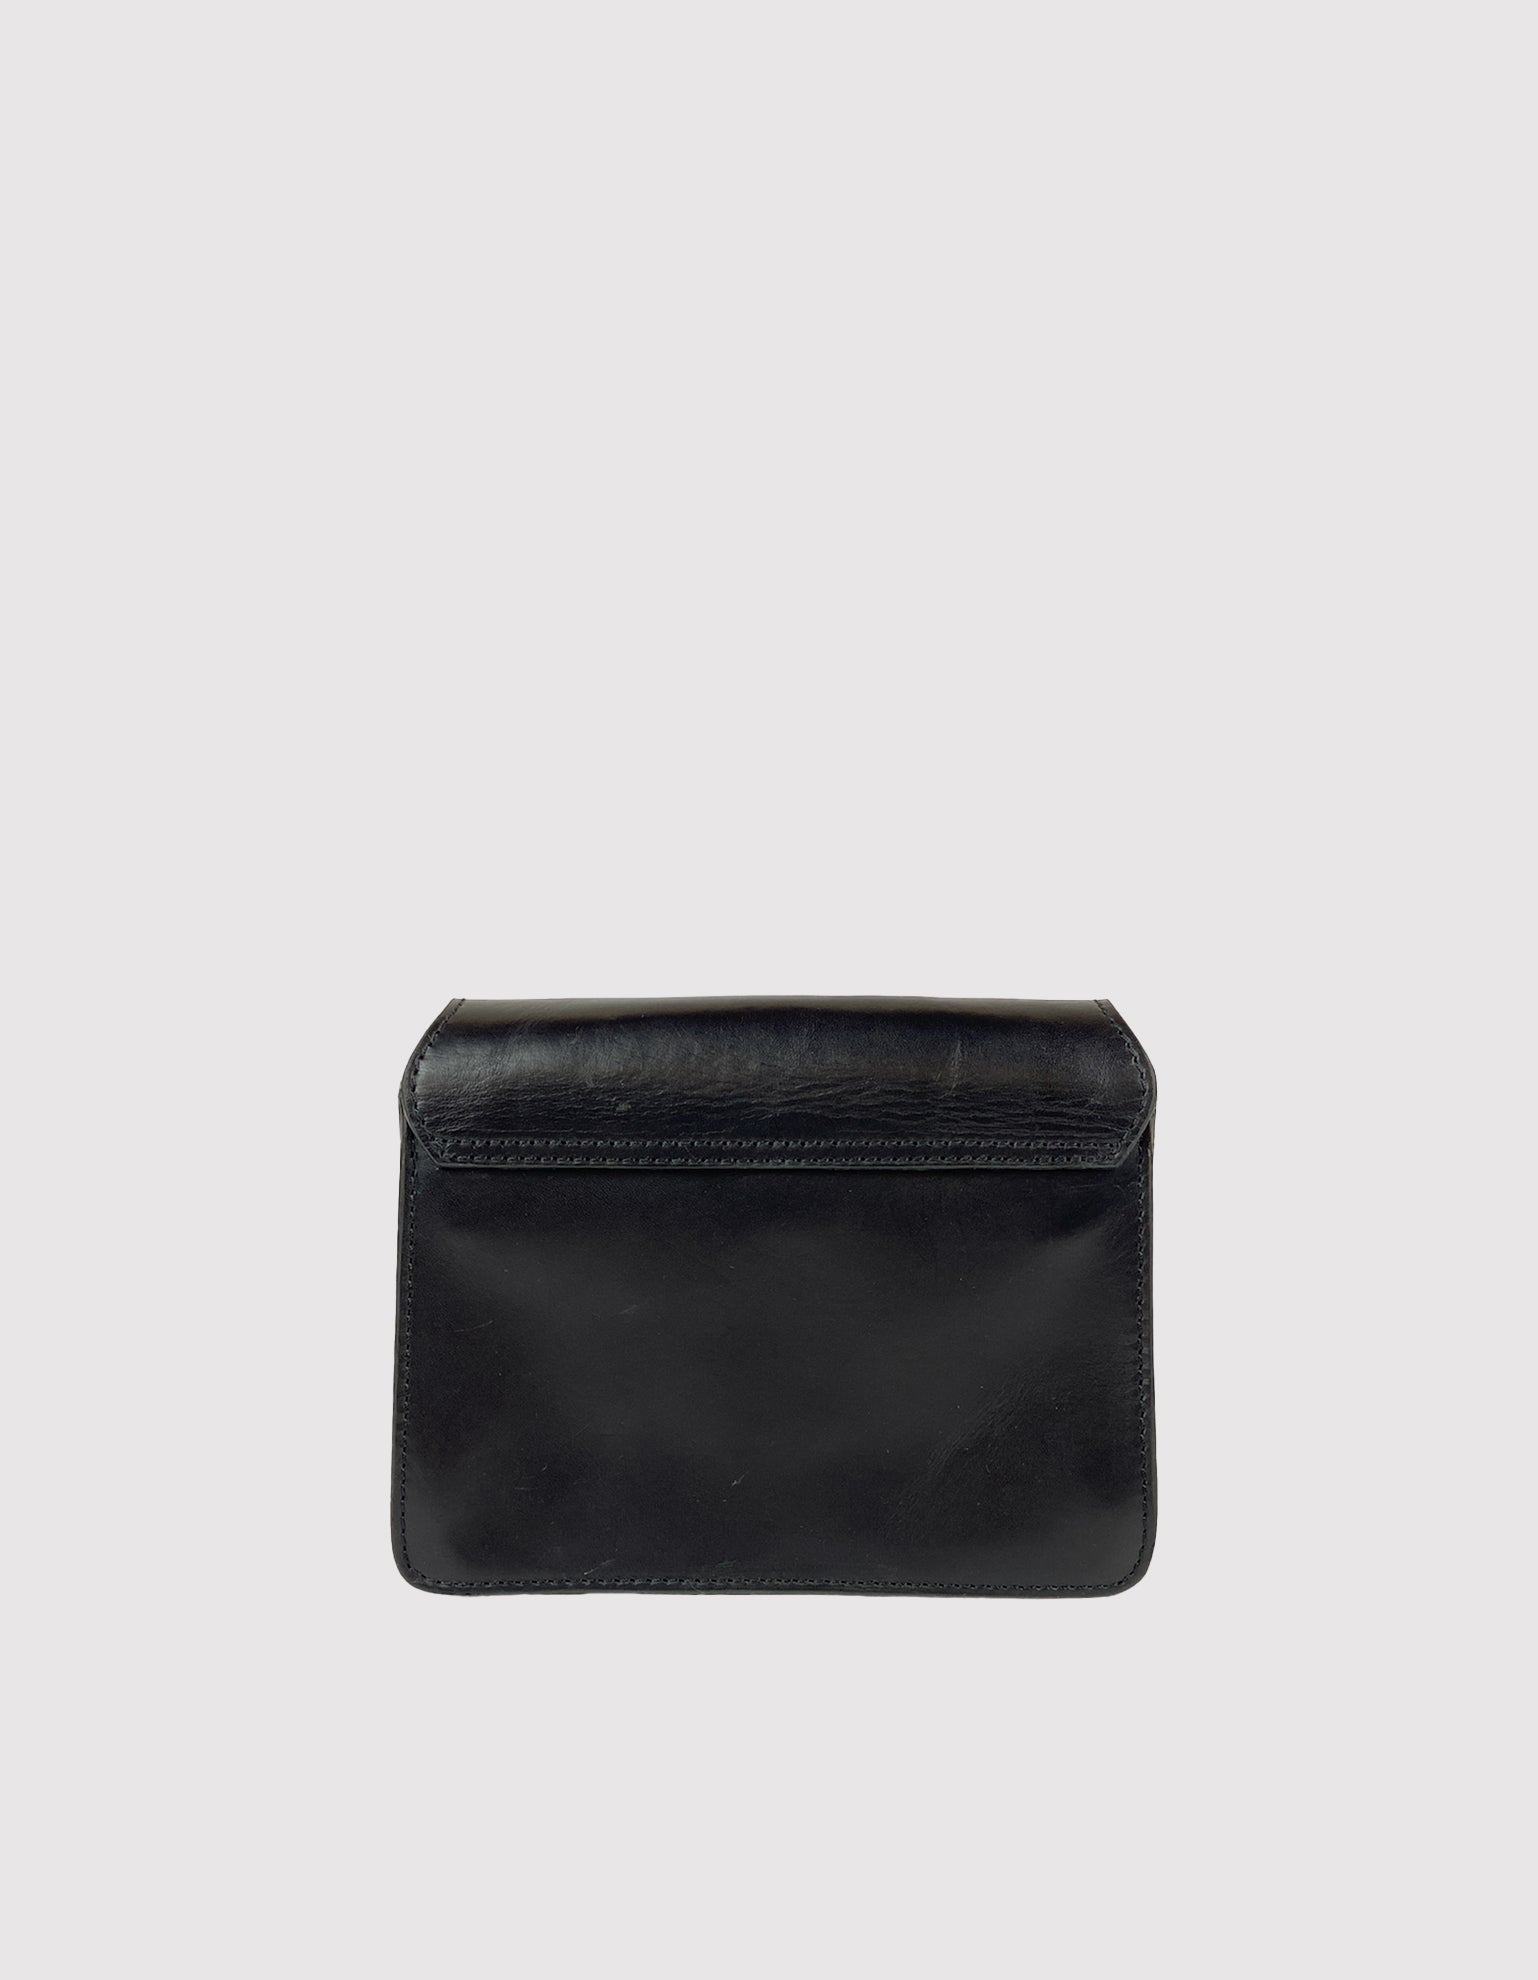 Perfectly Imperfect Harper Mini - Black Classic Leather